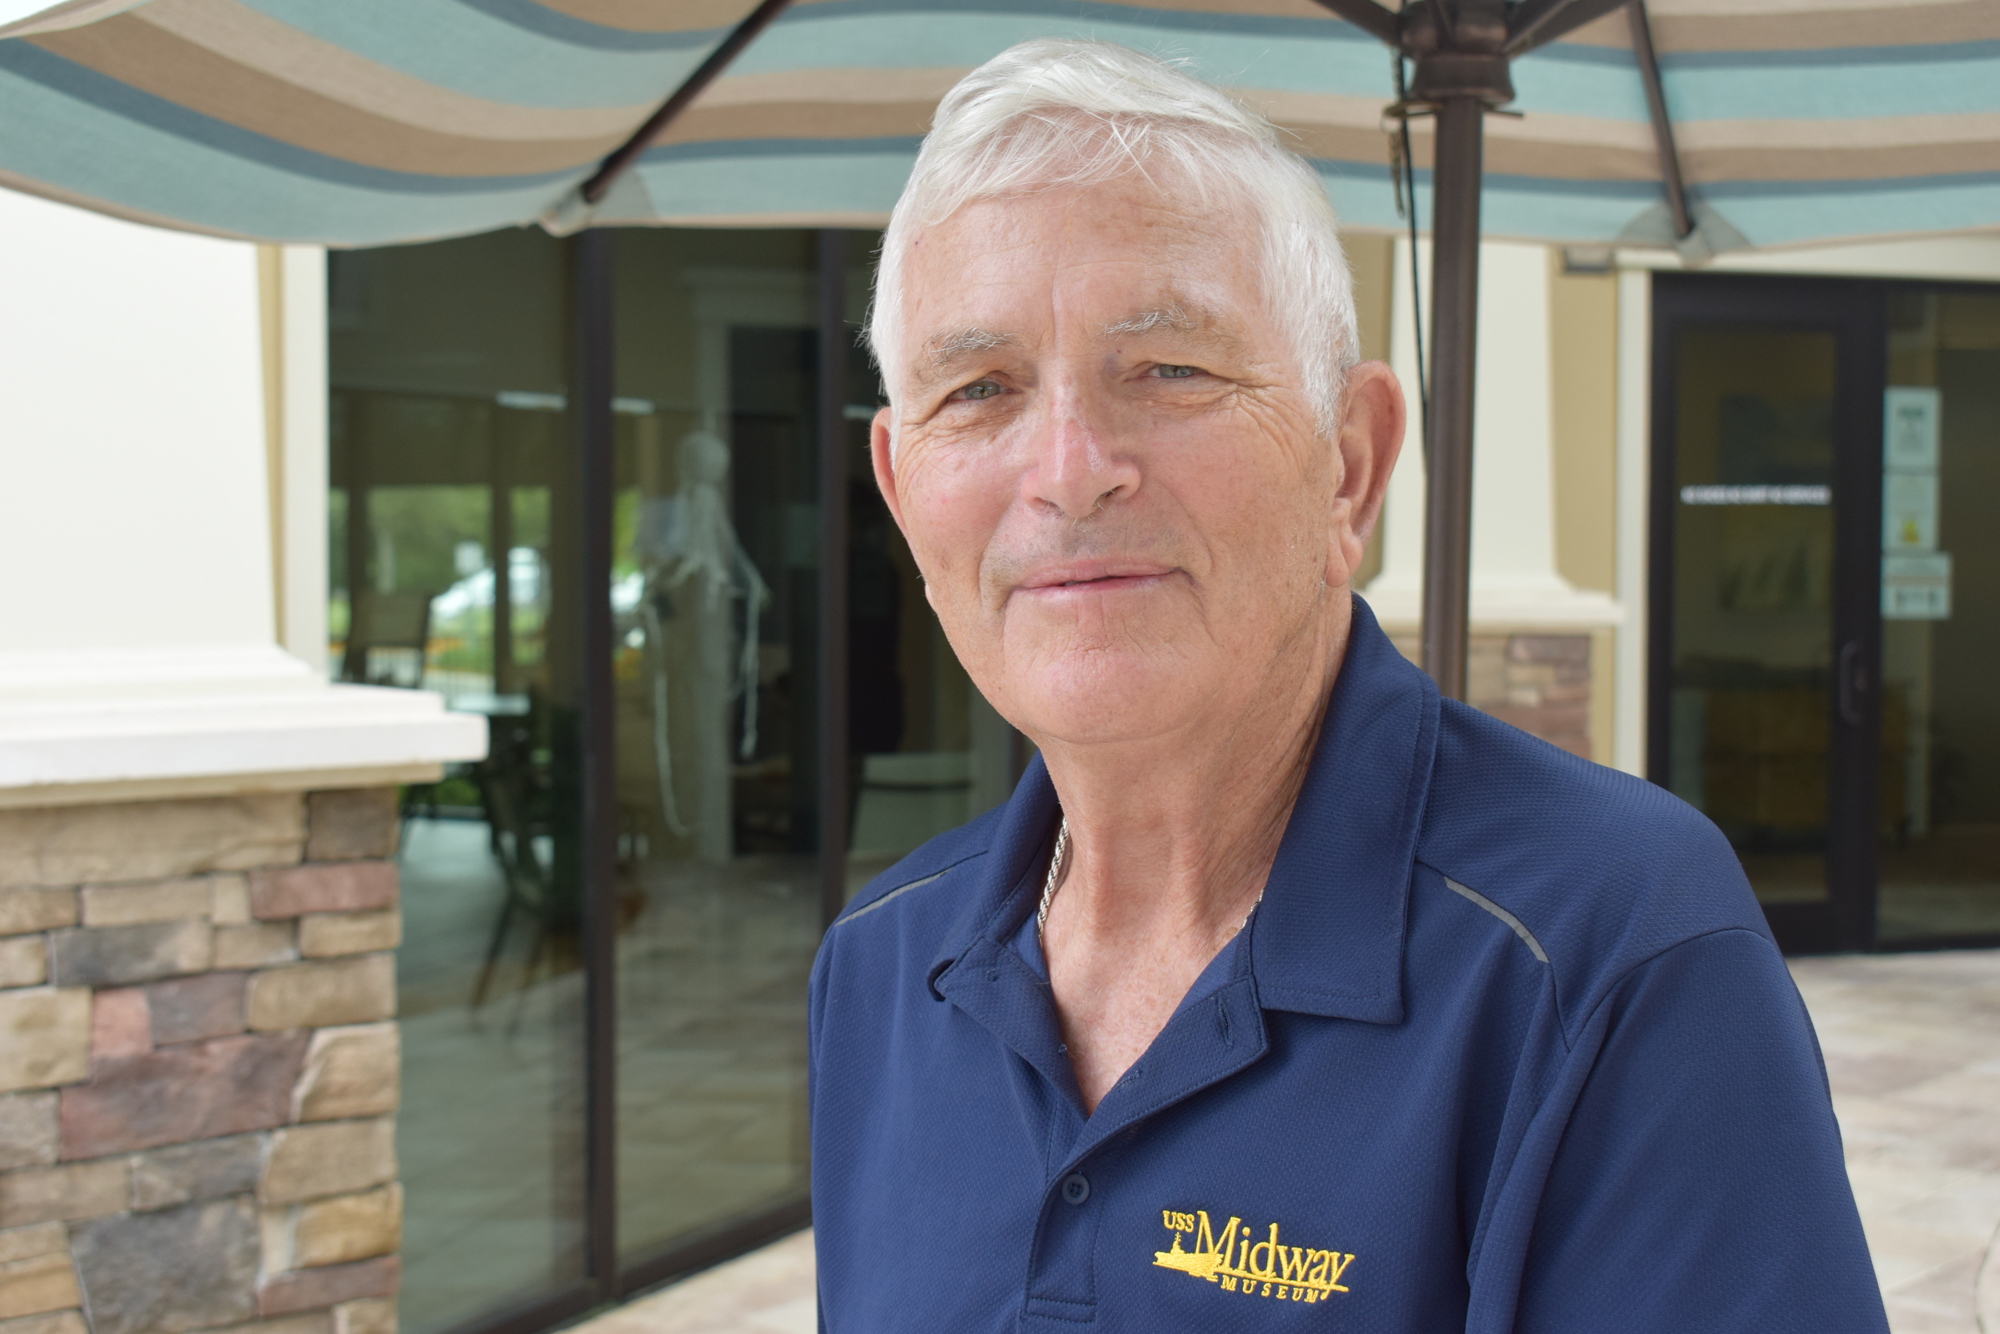 Del Webb's Dr. Richard Hurd said he loves the way his neighborhood treats veterans.